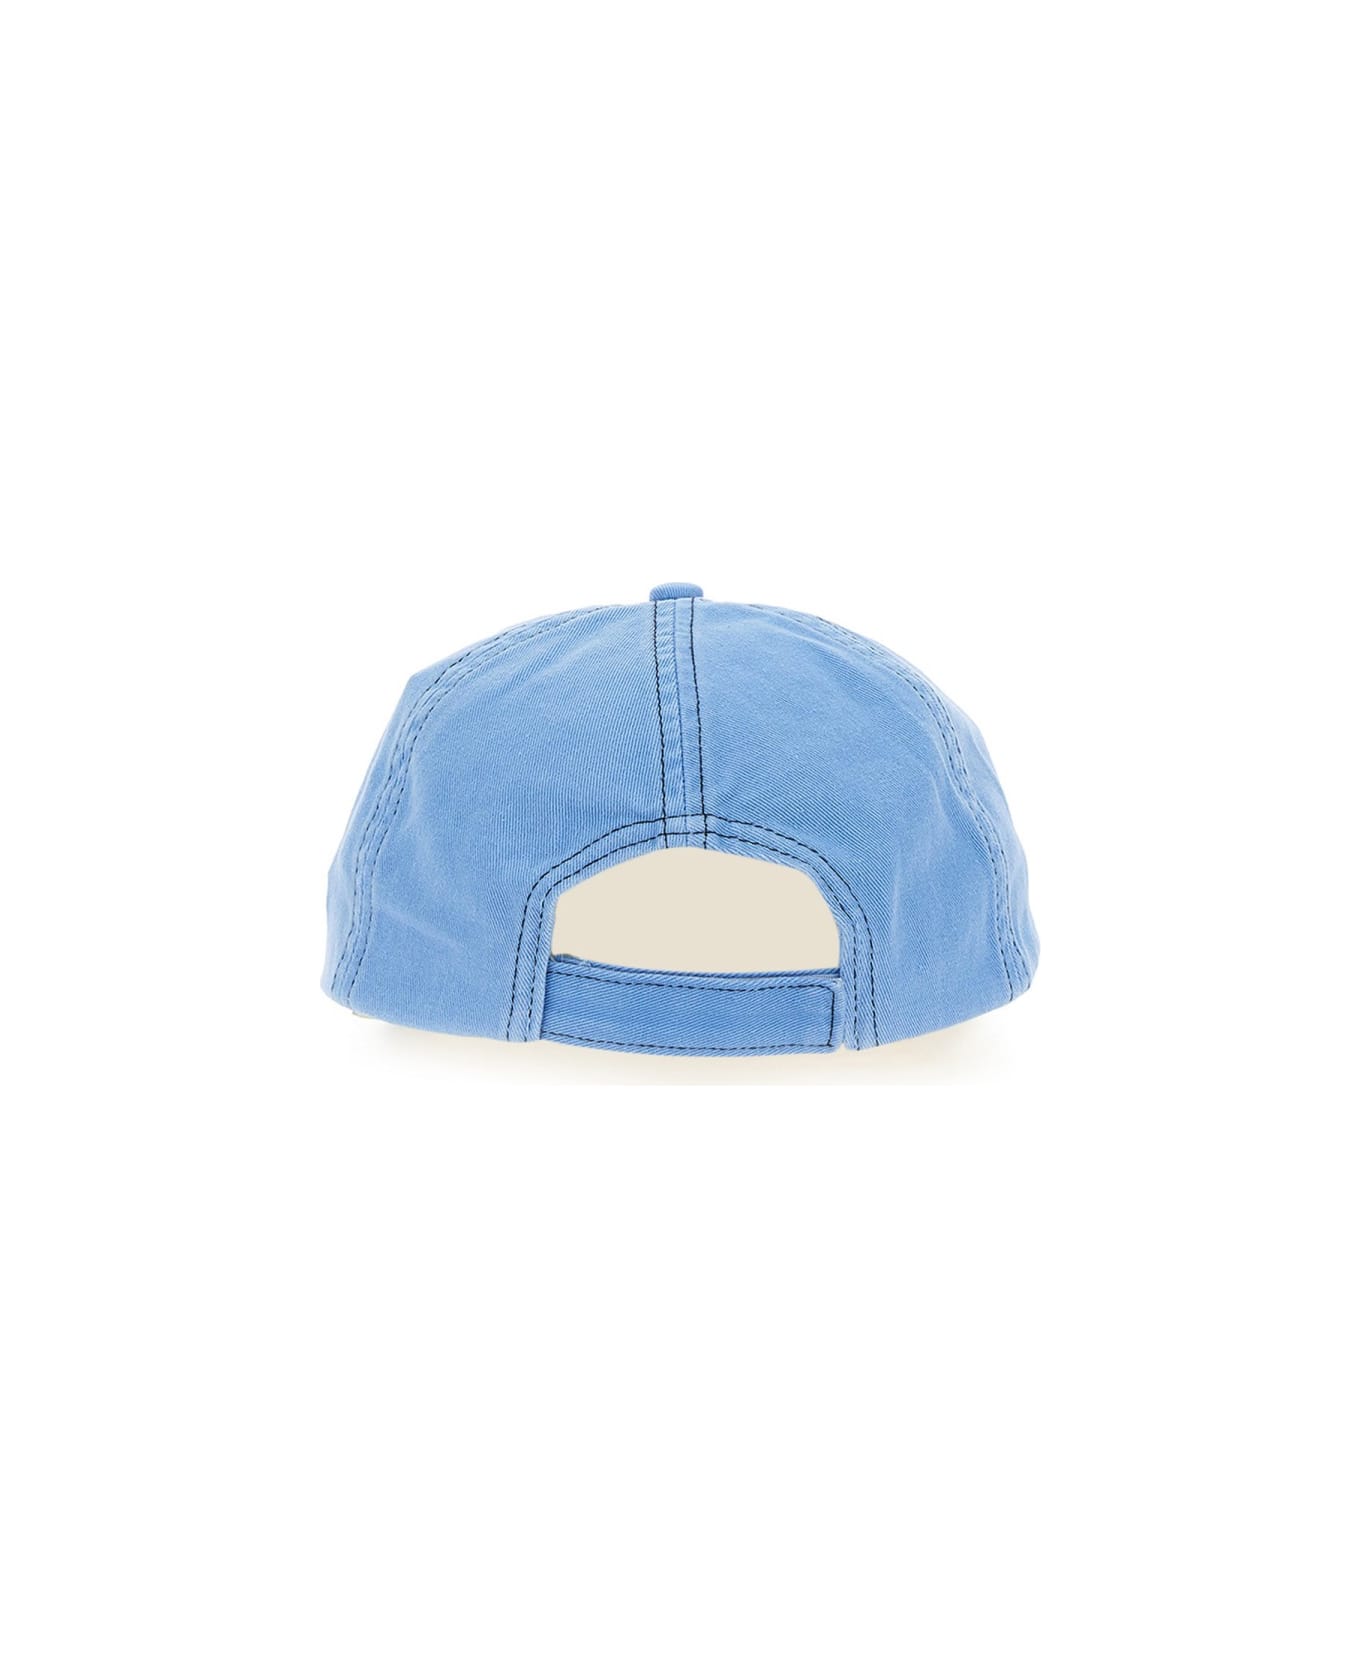 Ganni Baseball Hat With Logo - BABY BLUE